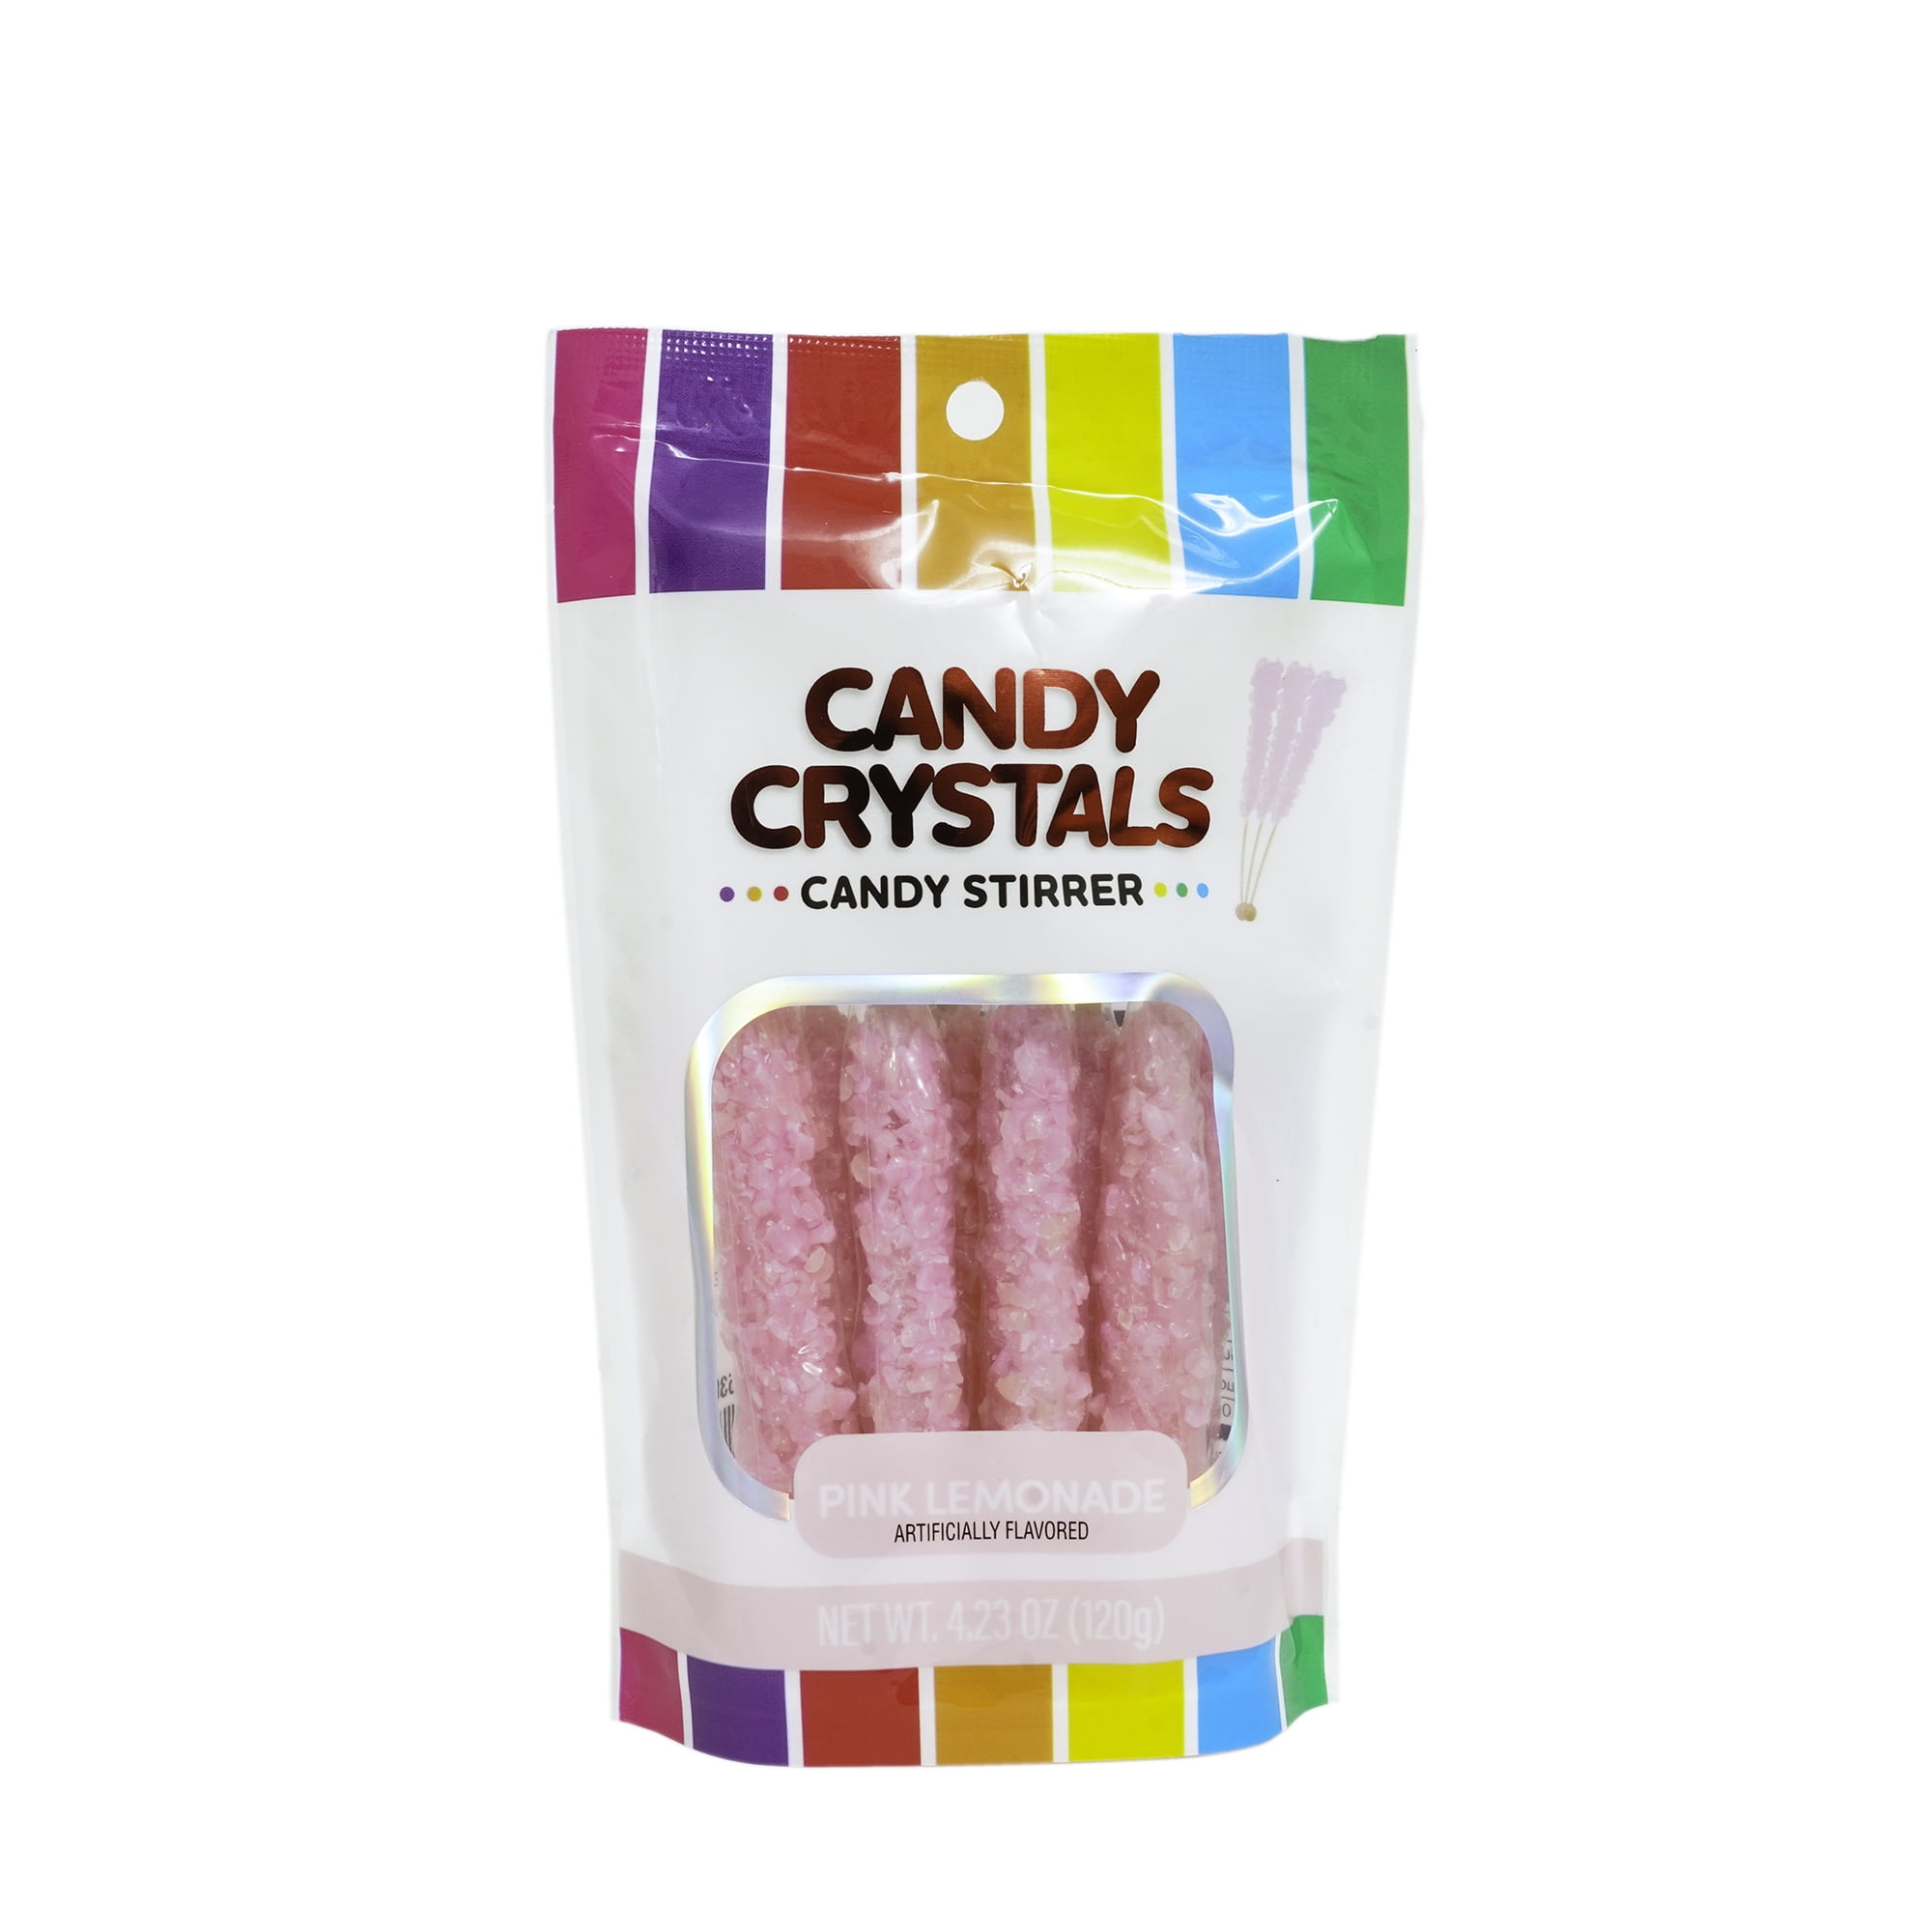 Hilco Candy Crystals Stirrers, Pink Lemonade, 8 Pack